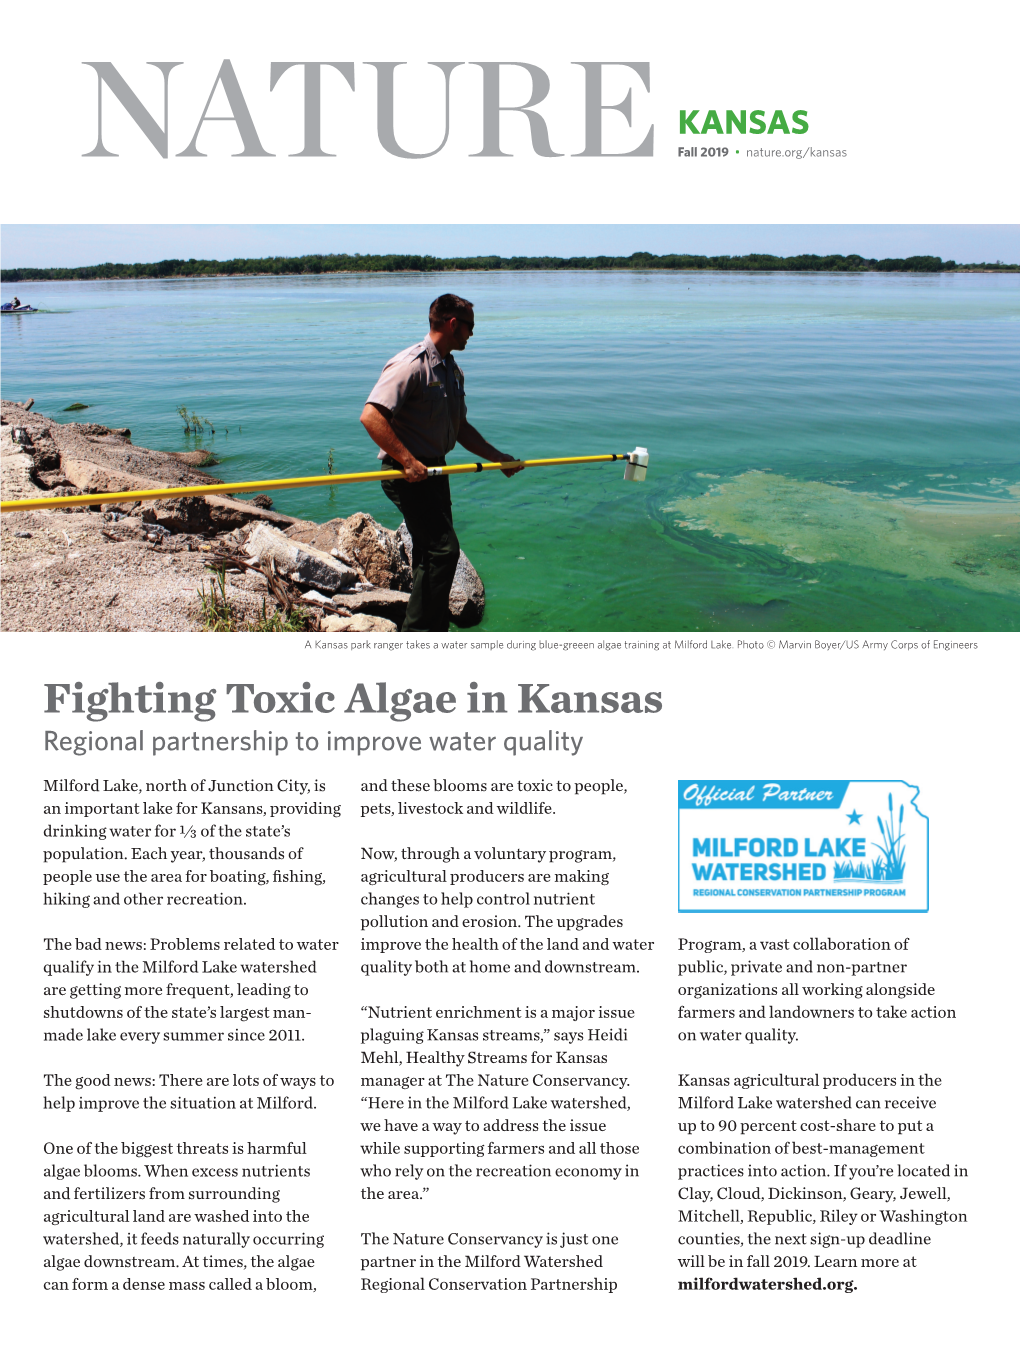 Fighting Toxic Algae in Kansas Regional Partnership to Improve Water Quality